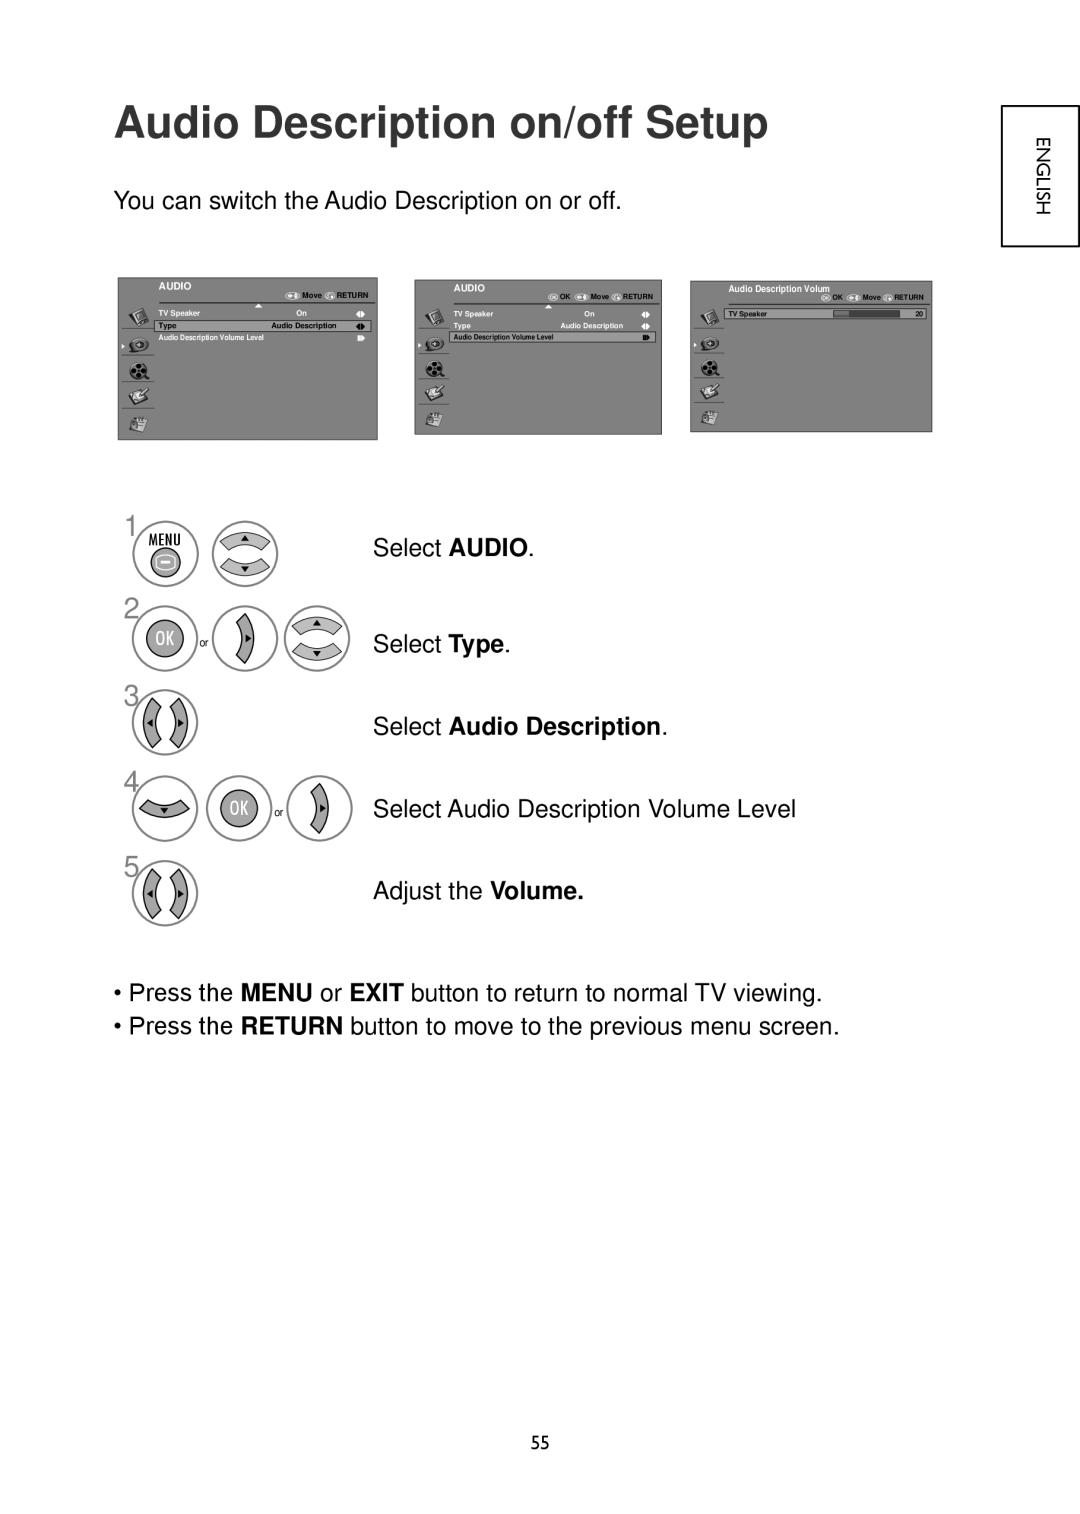 Hitachi 19LD4550U, 32LD4550U, 32LD4550C, 26LD4550C, 22LD4550C Audio Description on/off Setup, Select Audio Description 